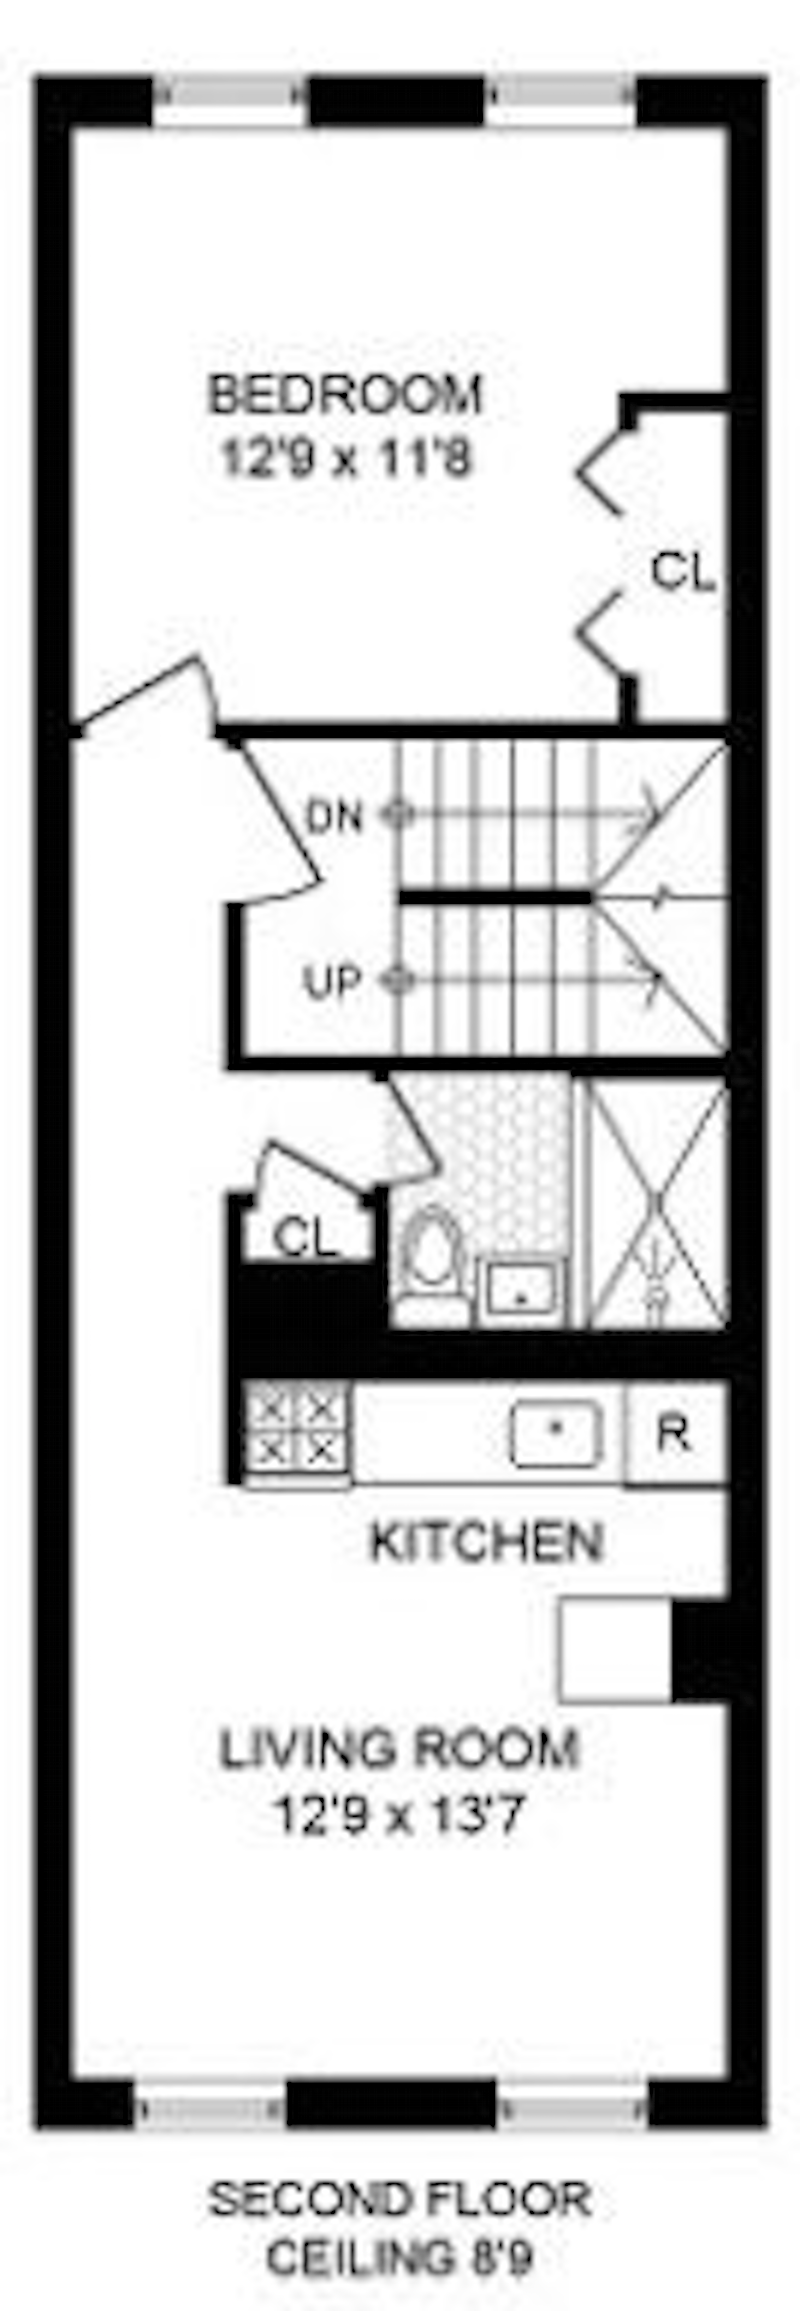 Floorplan for 179 Carlton Avenue, 2